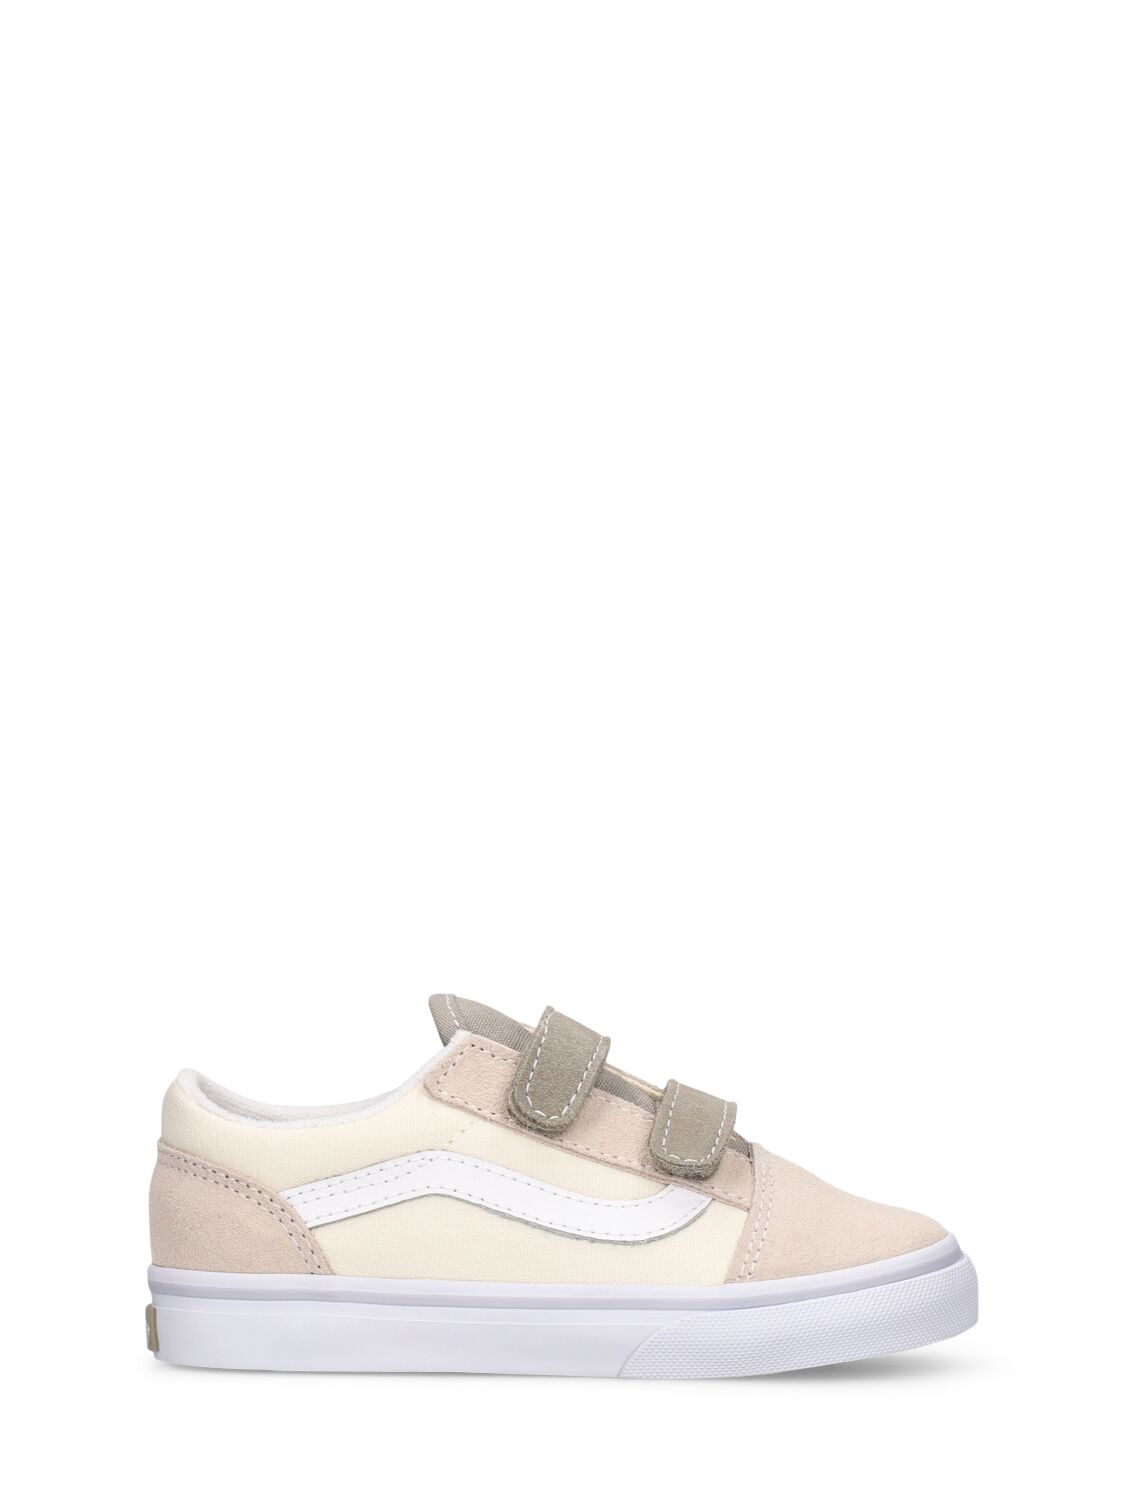 Vans Kids' Old Skool V Leather Sneakers In White